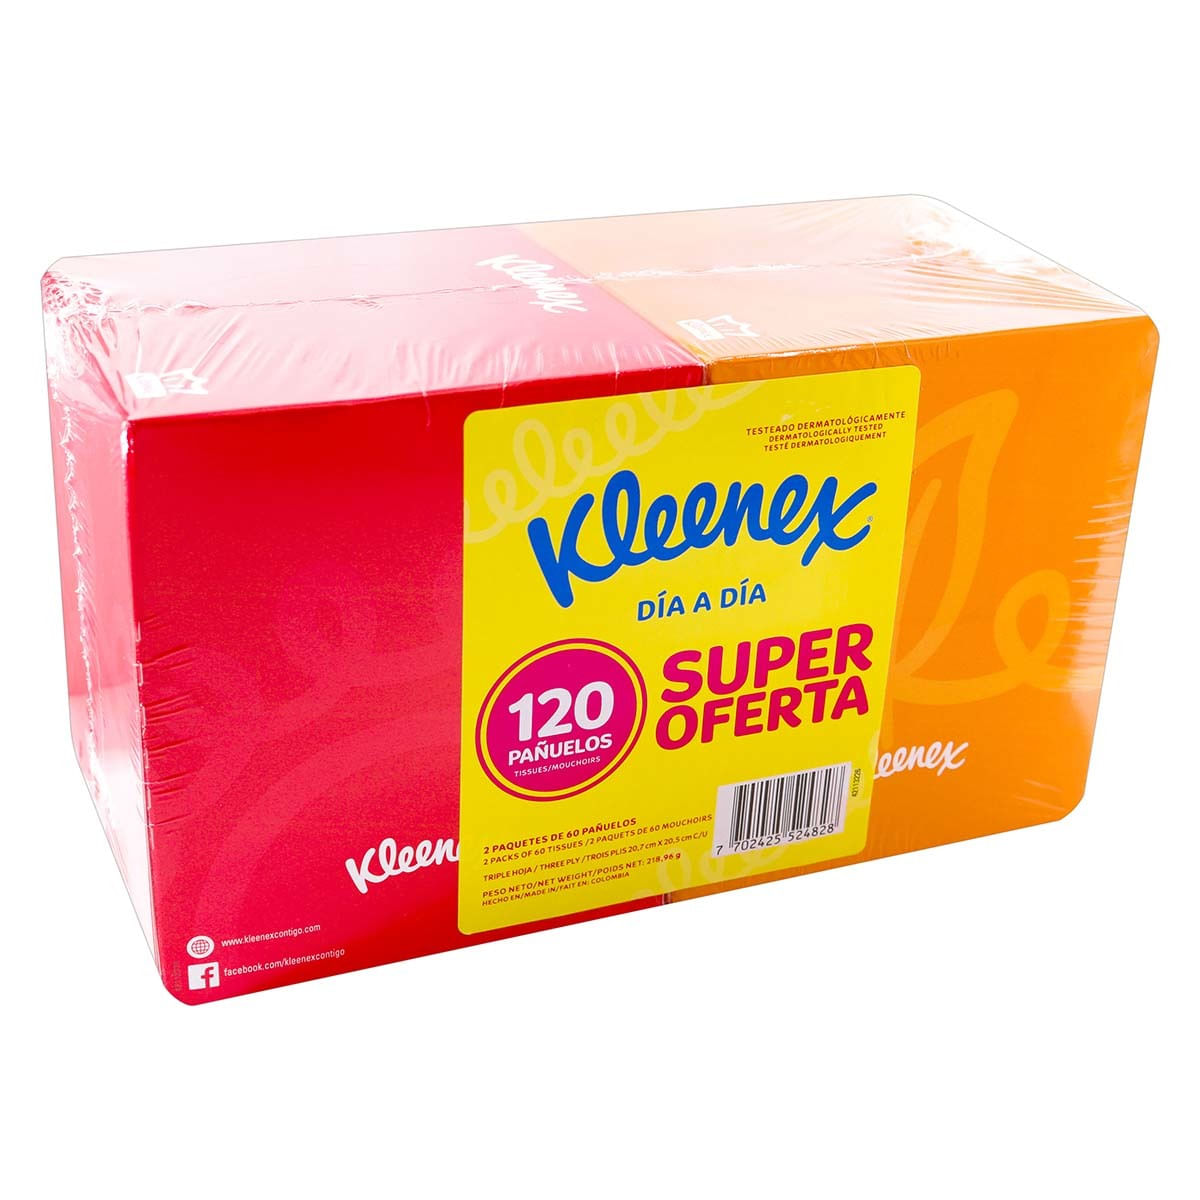 Pañuelos Kleenex Día a Día Cubo Caja x 60 Unidades Paquete x 2 Uds Super  Oferta. - Farmaexpress